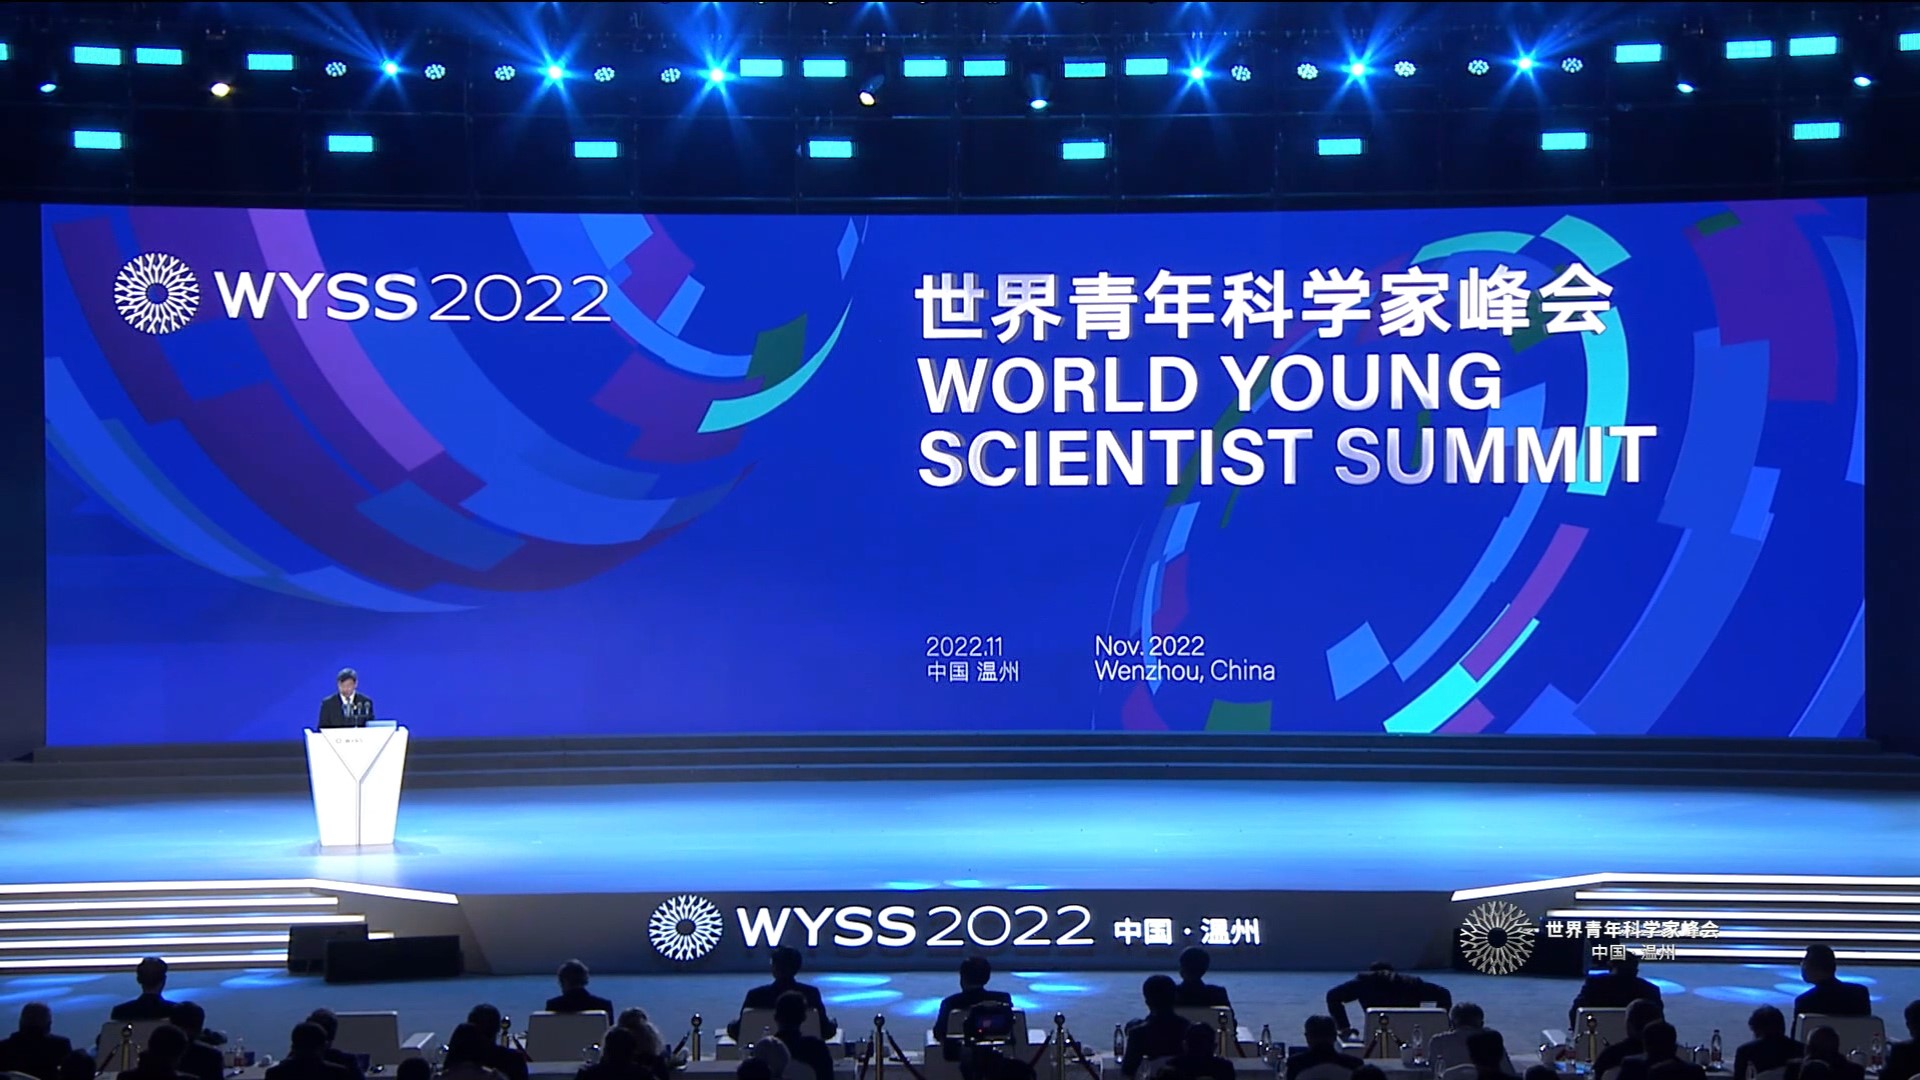 Opening Ceremony of WYSS 2022